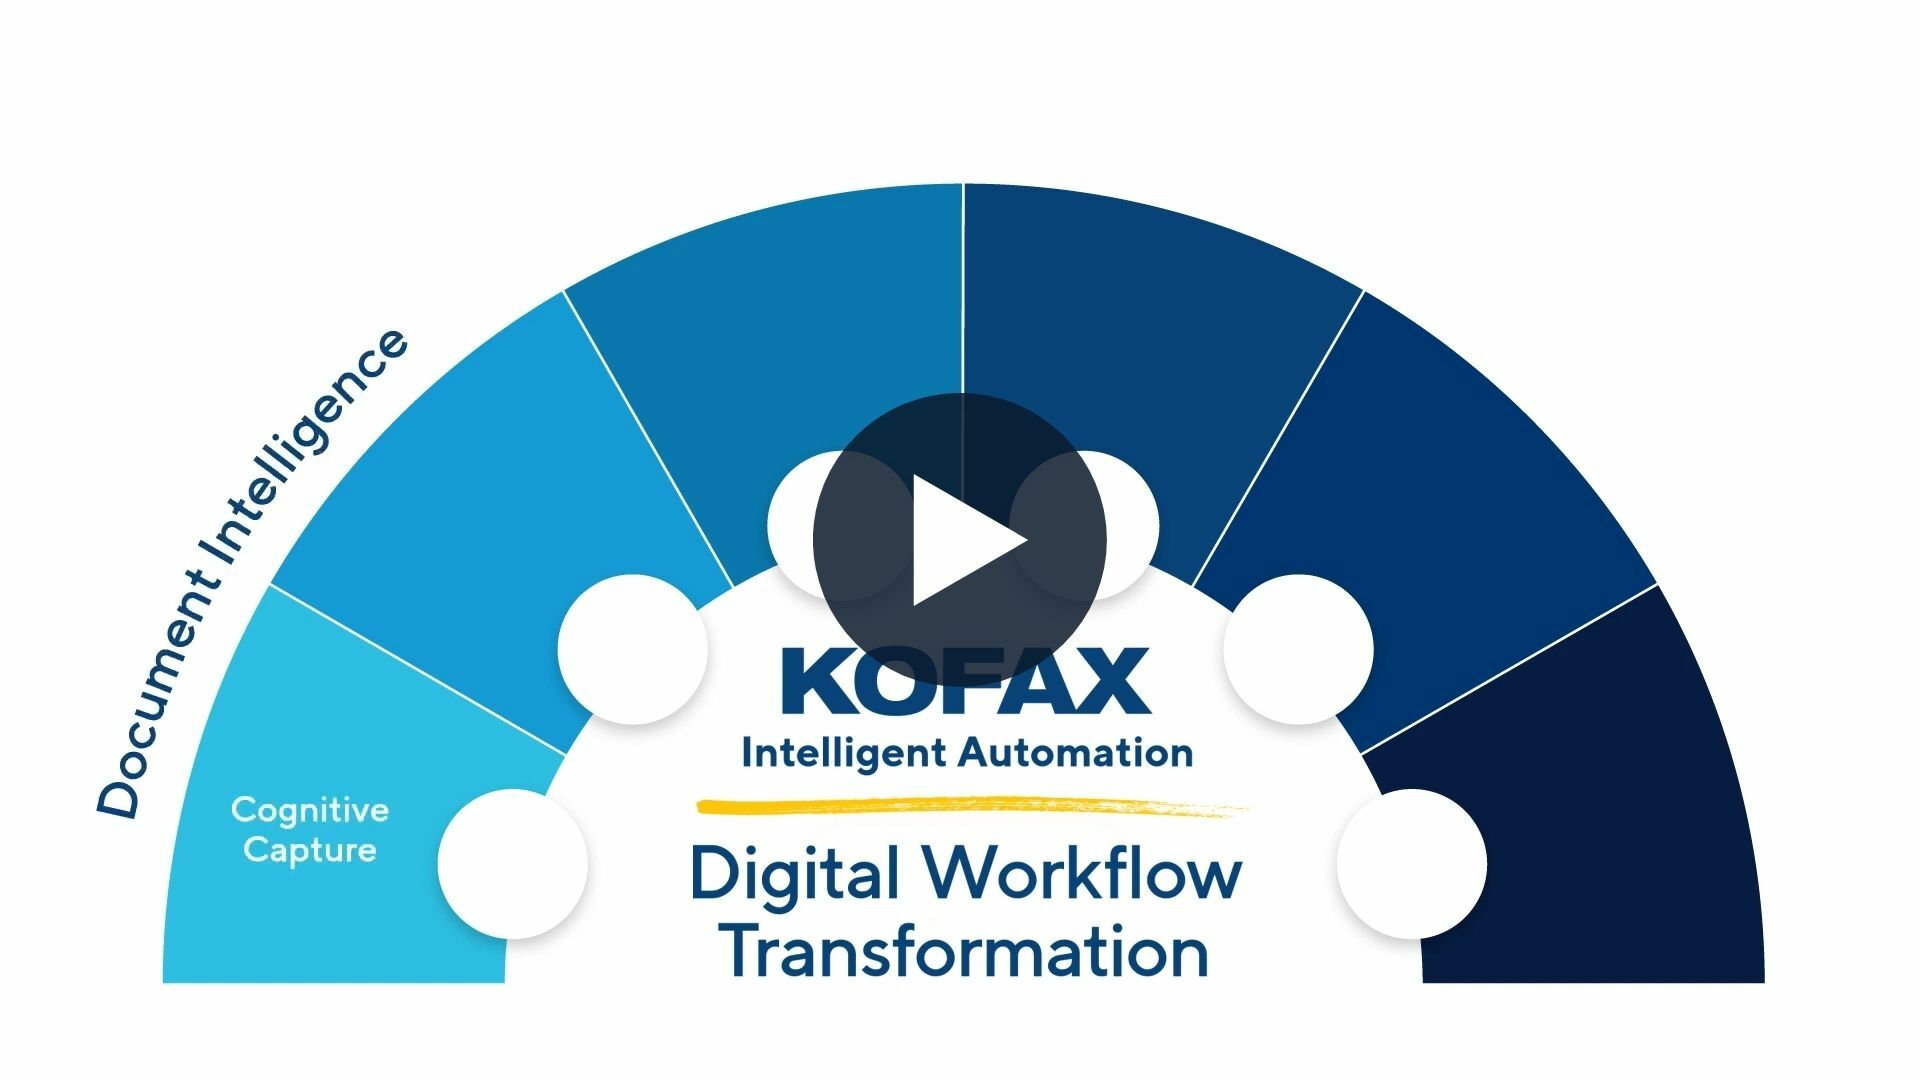 Digital Workflow Transformation with Kofax Intelligent Automation